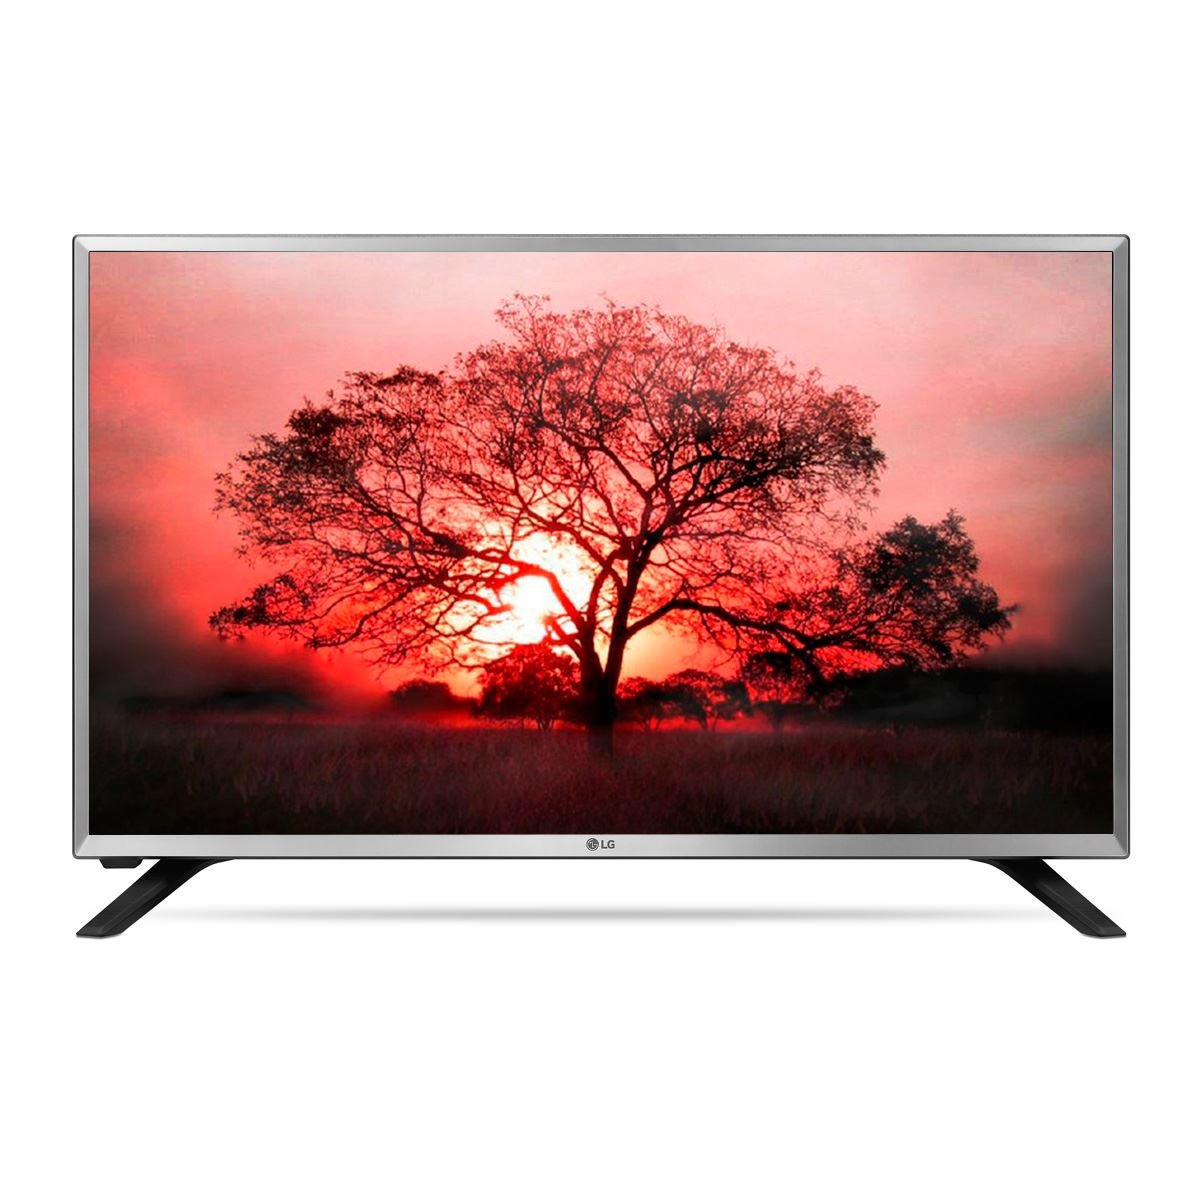 Lg 32gs95ue. LG Smart TV 32. Телевизор лж 32 дюйма смарт. Smart TV LG 32lf50. Телевизор LG Smart TV 32 дюйма.